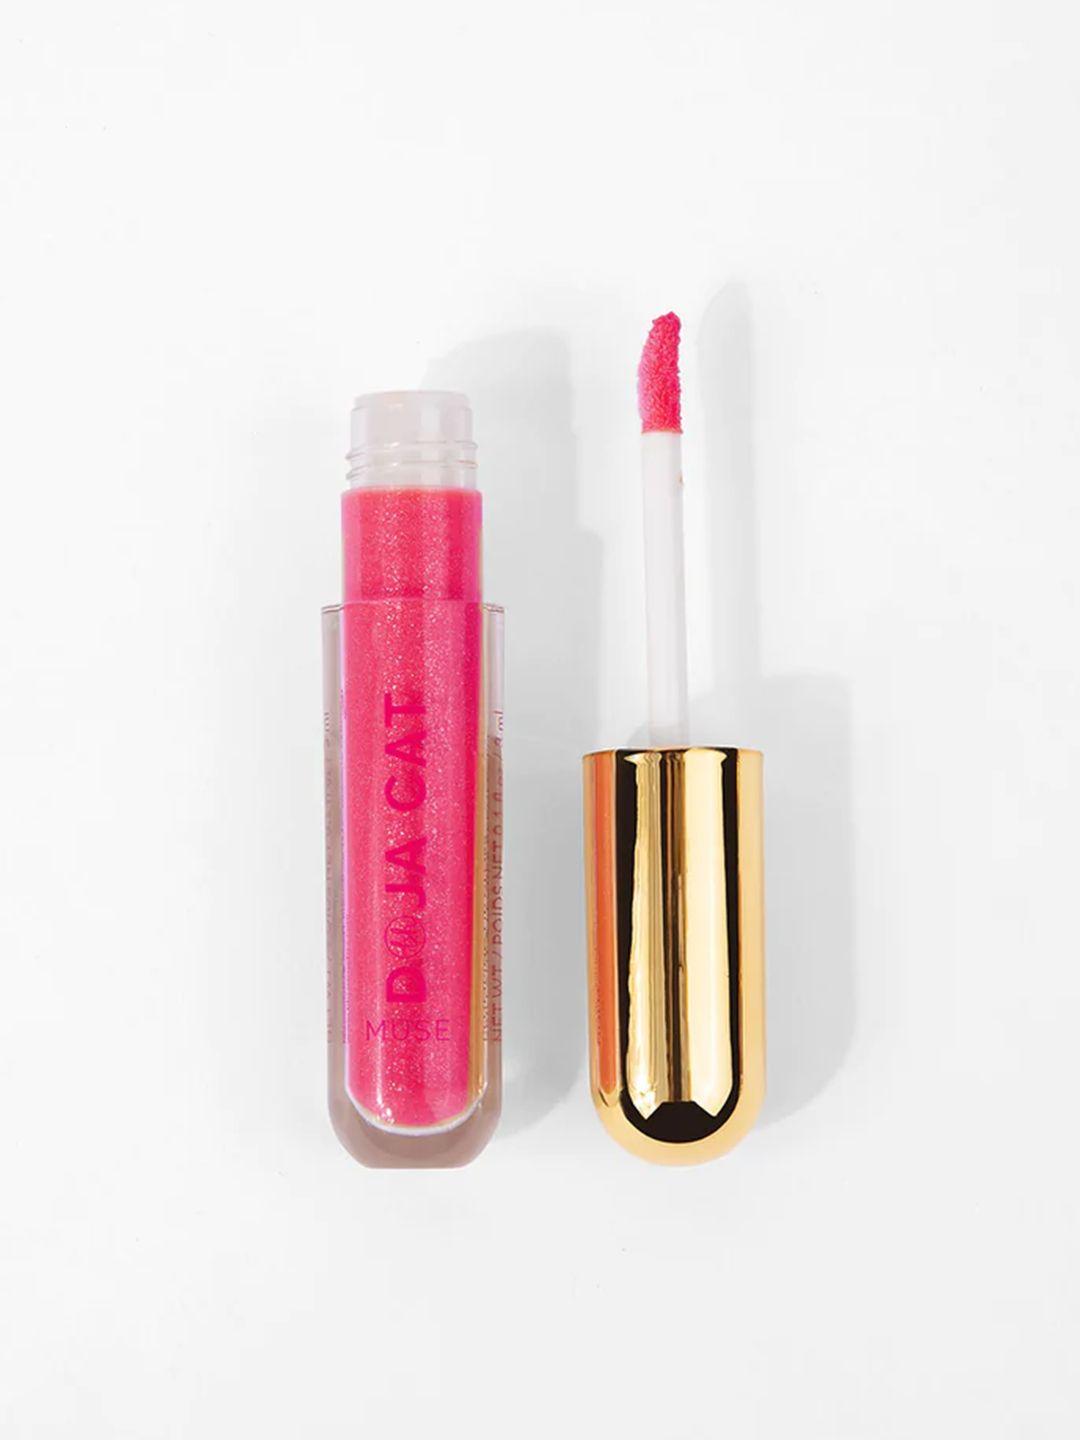 bh cosmetics x doja cat muse plumping lip gloss with vitamin e 3ml - red